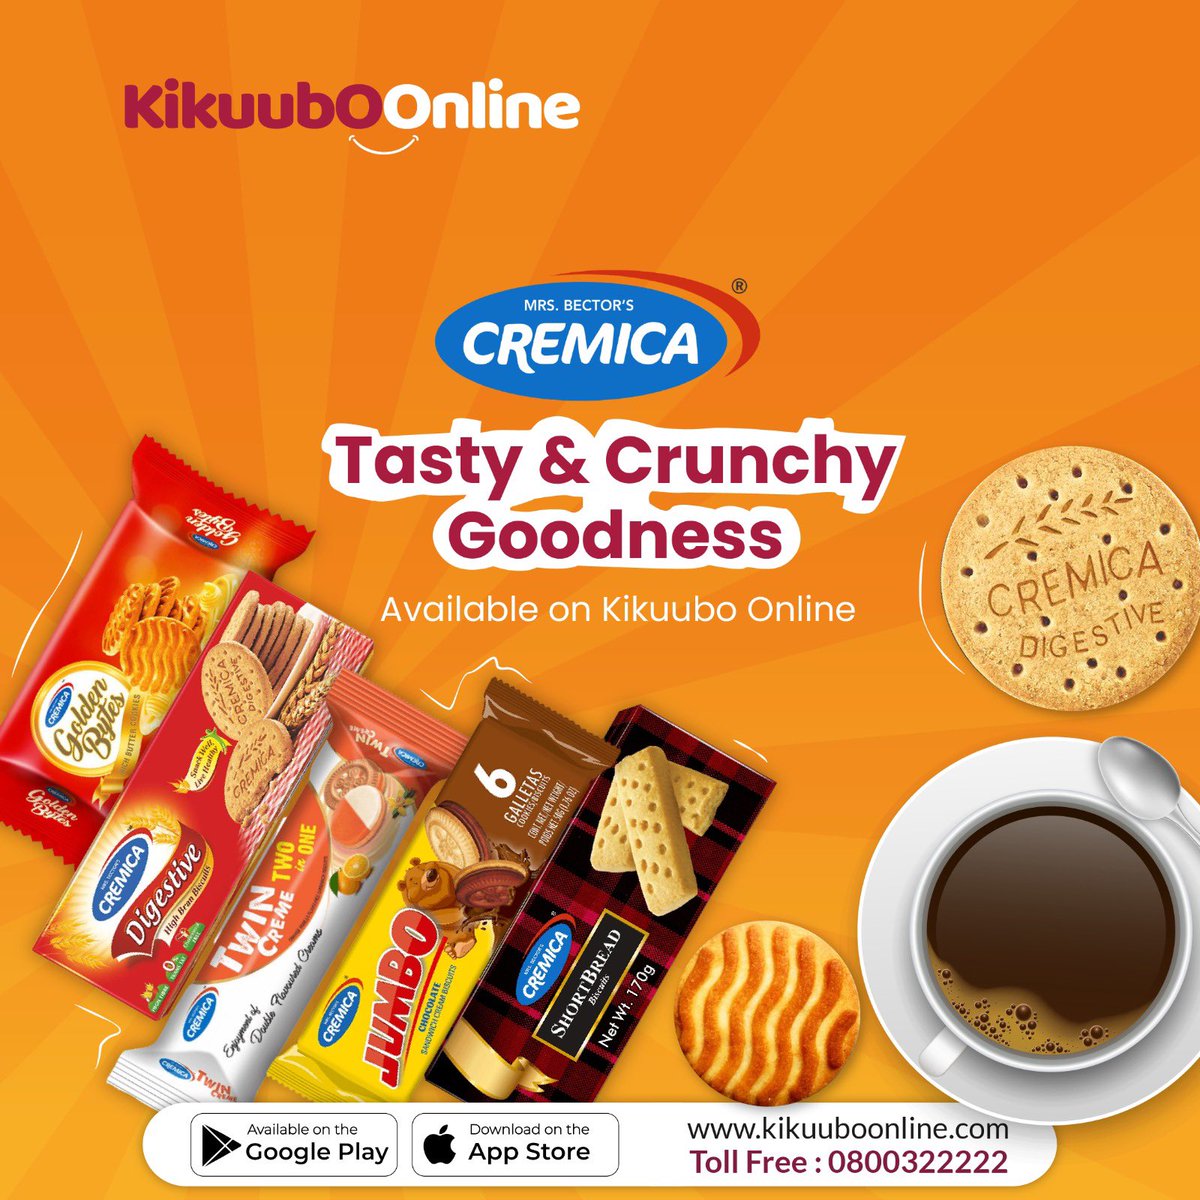 Cookies and biscuits you love♥️
#kikuuboOnline